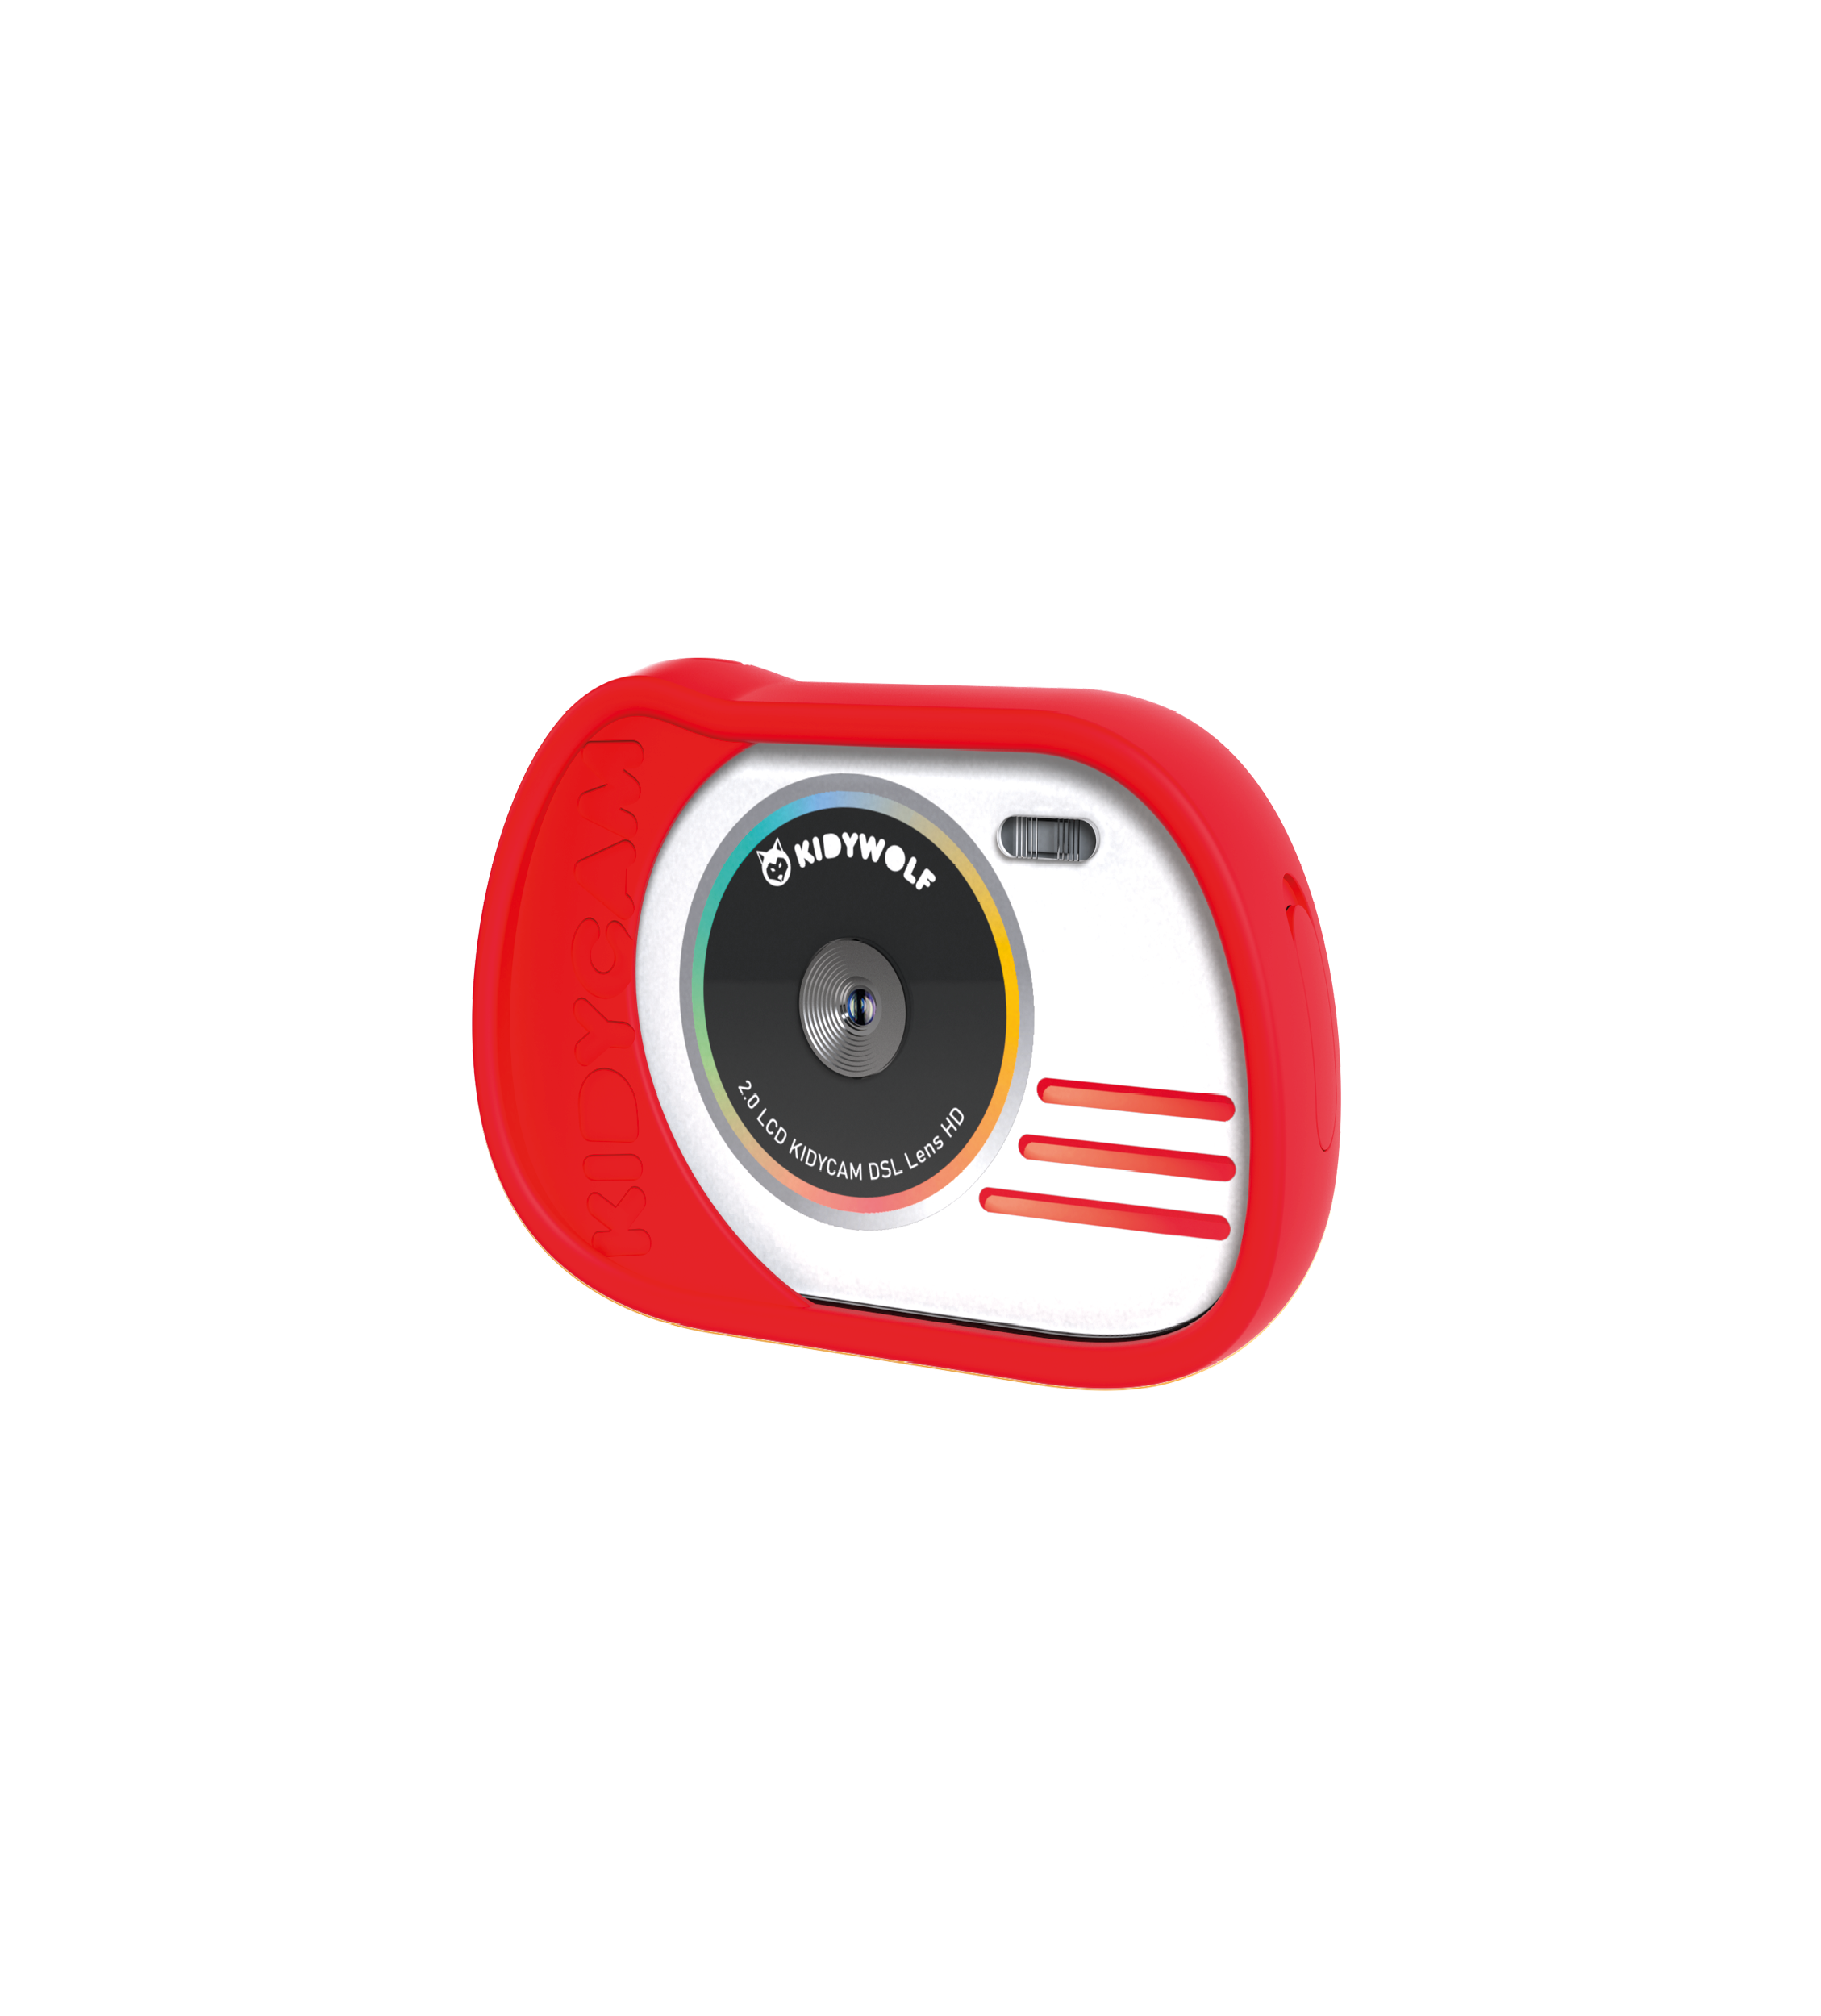 Kidycam appareil photo étanche rouge - Kidywolf - Merlinpinpin